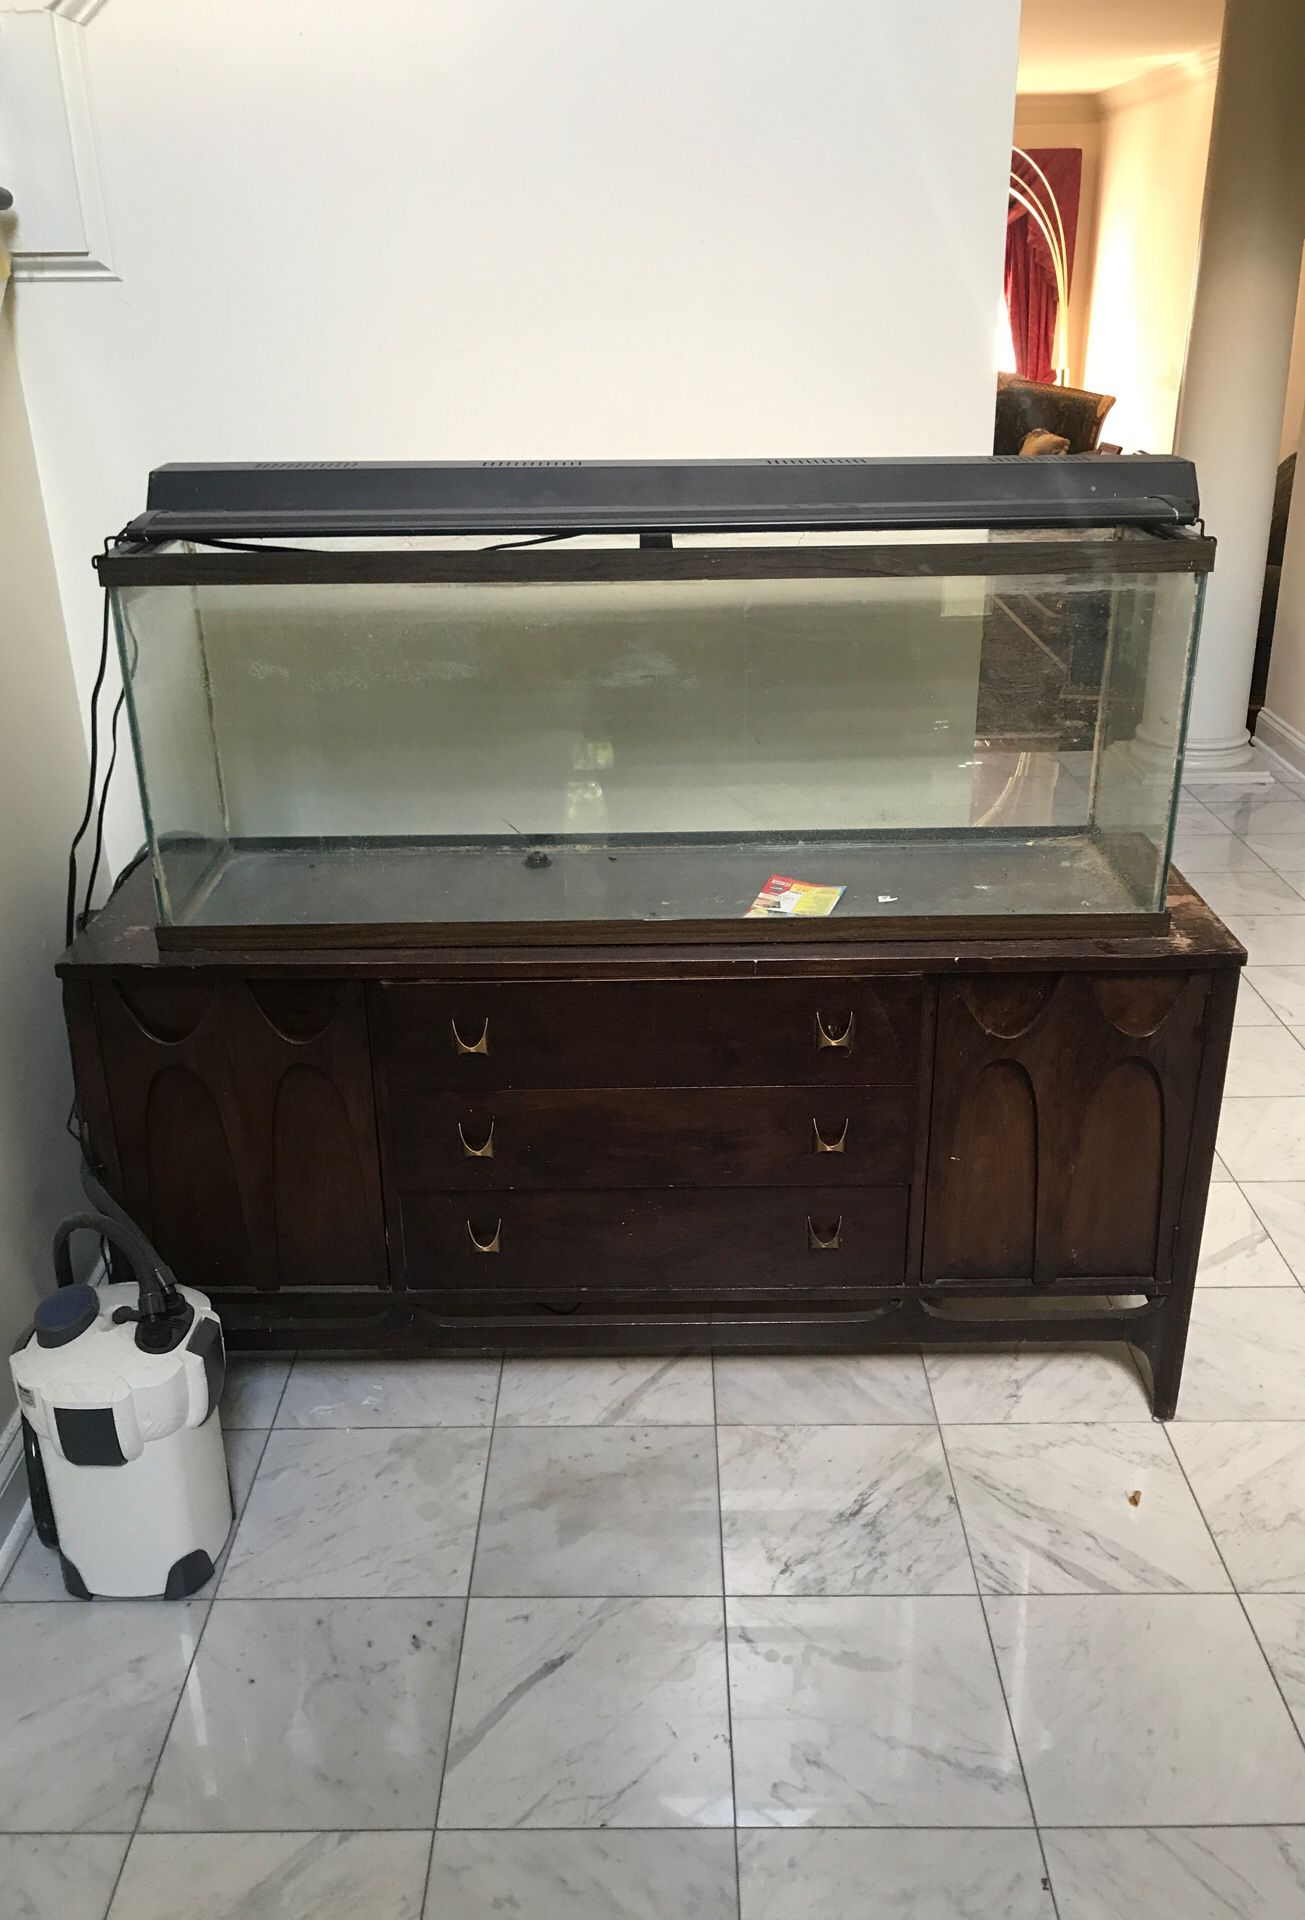 50 gallon Fish Tank and table